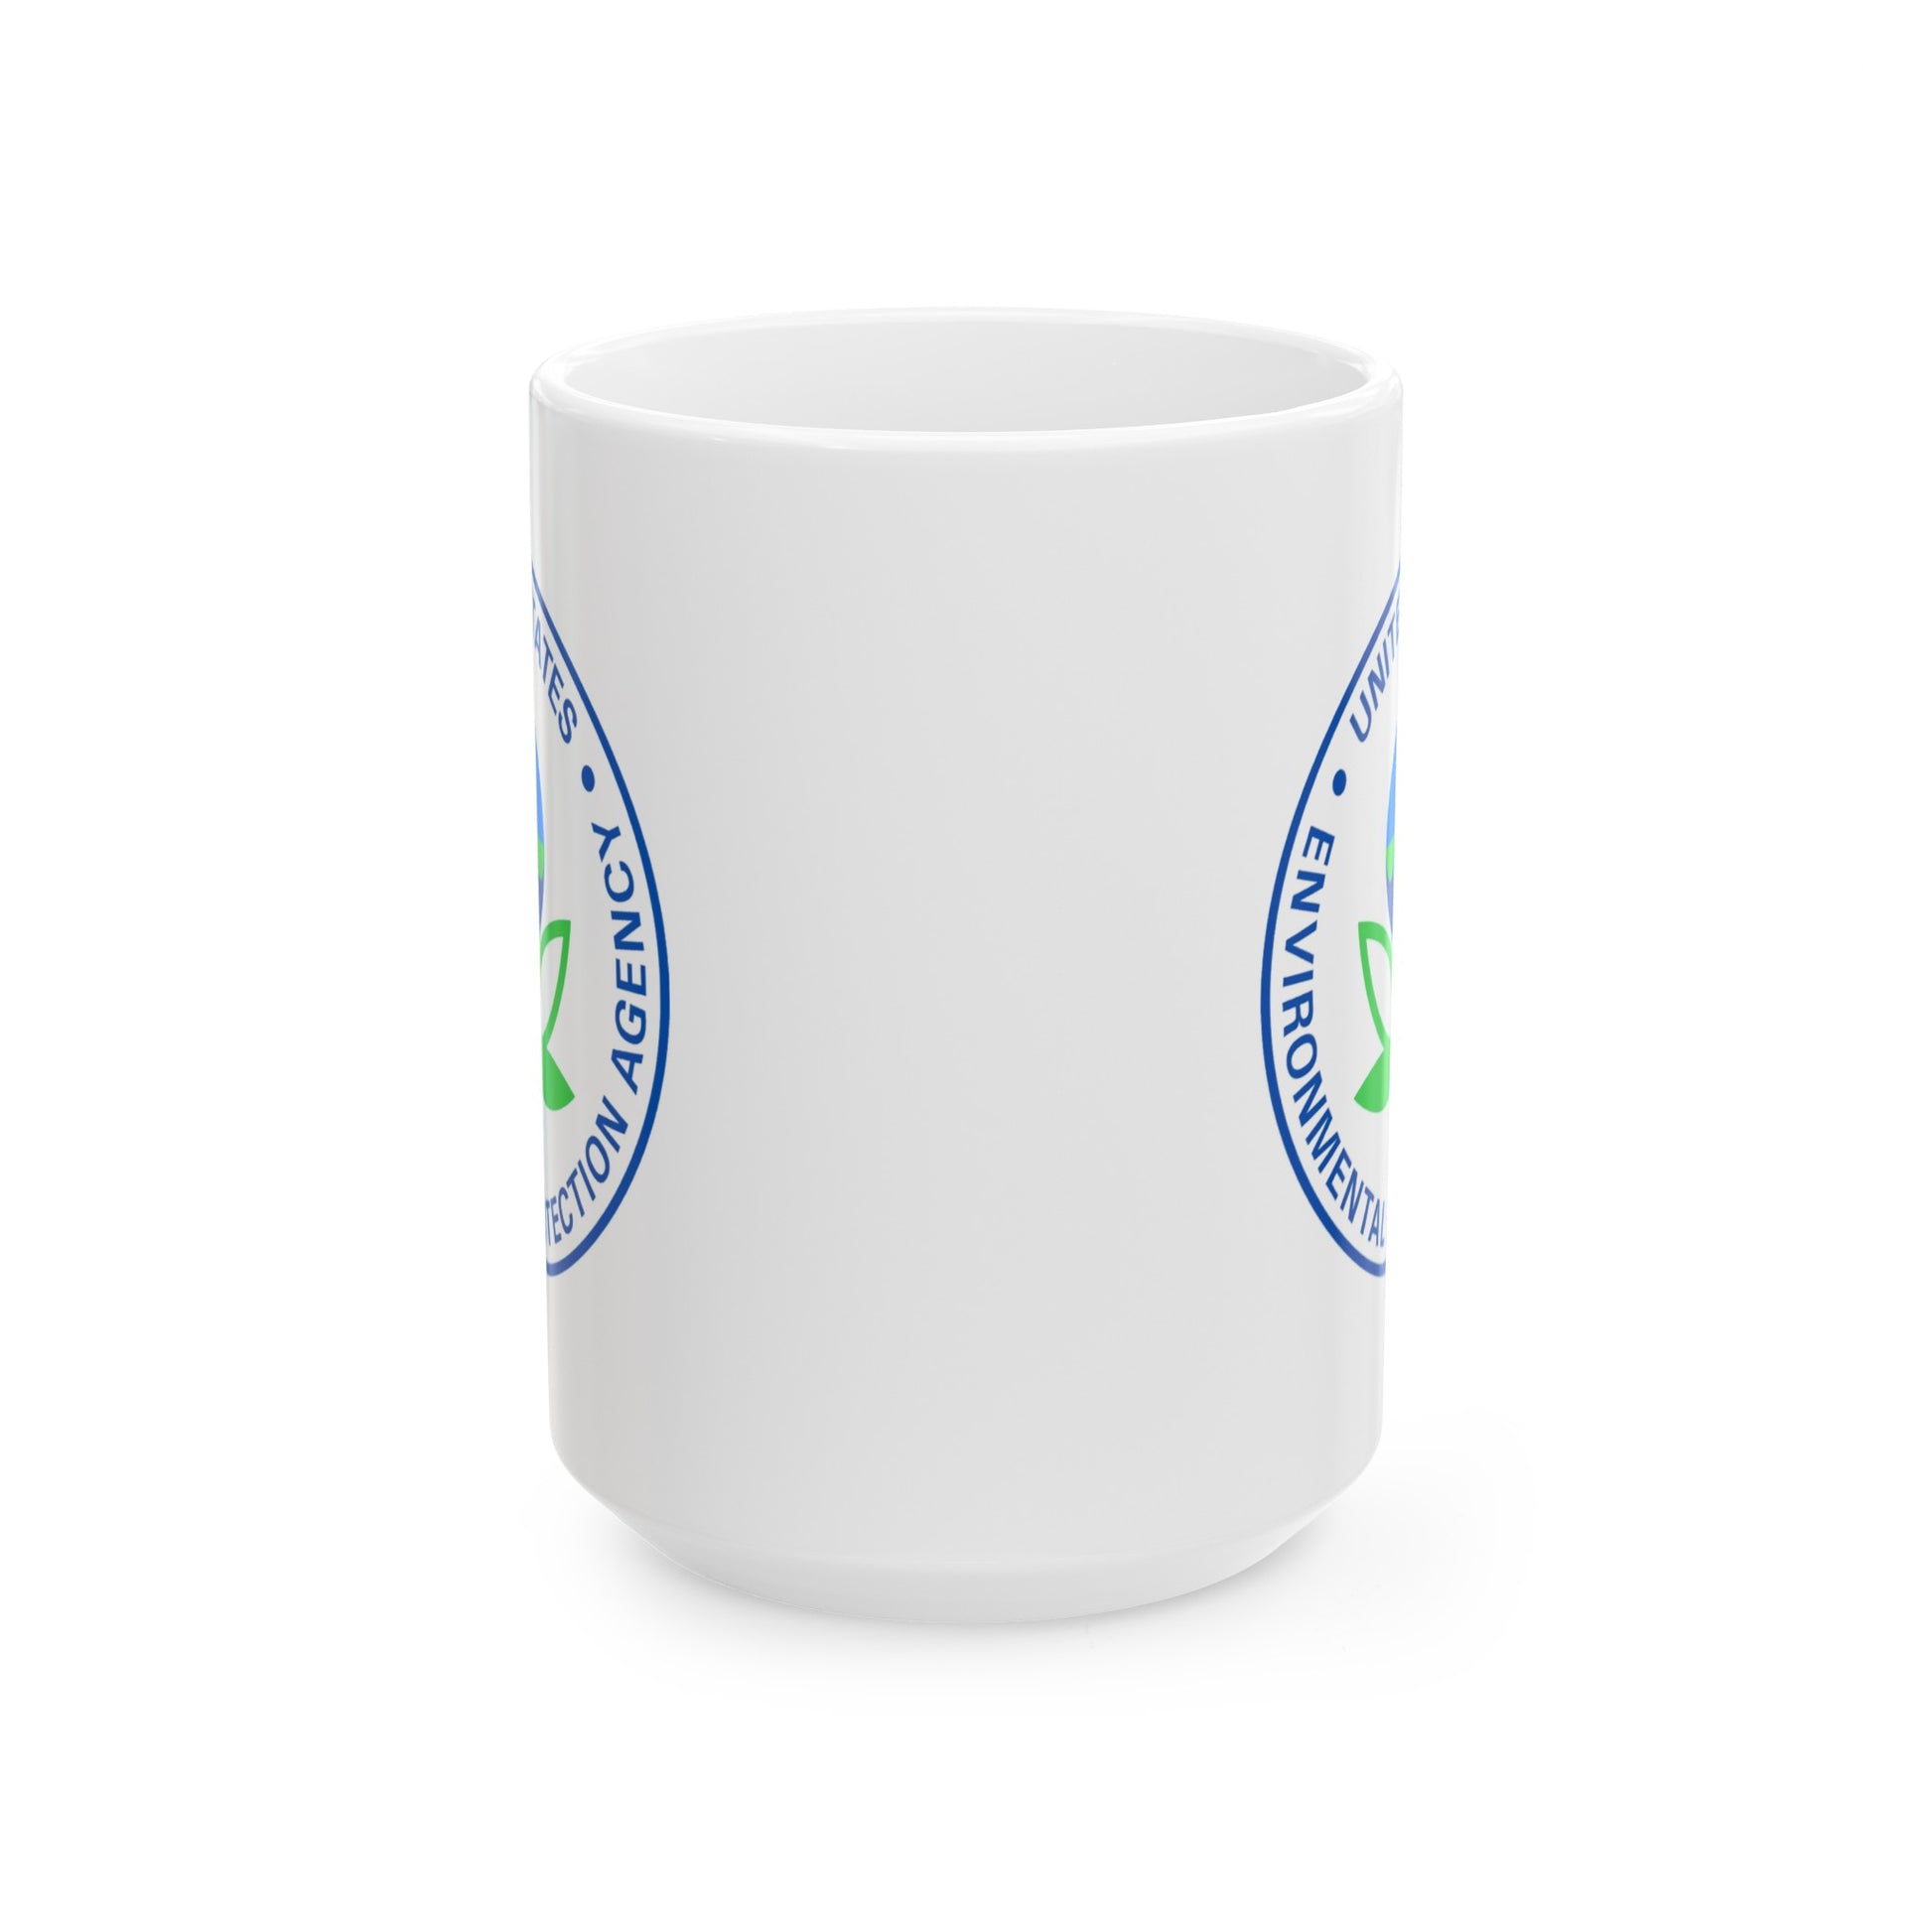 US EPA Coffee Mug - Double Sided White Ceramic 15oz by TheGlassyLass.com